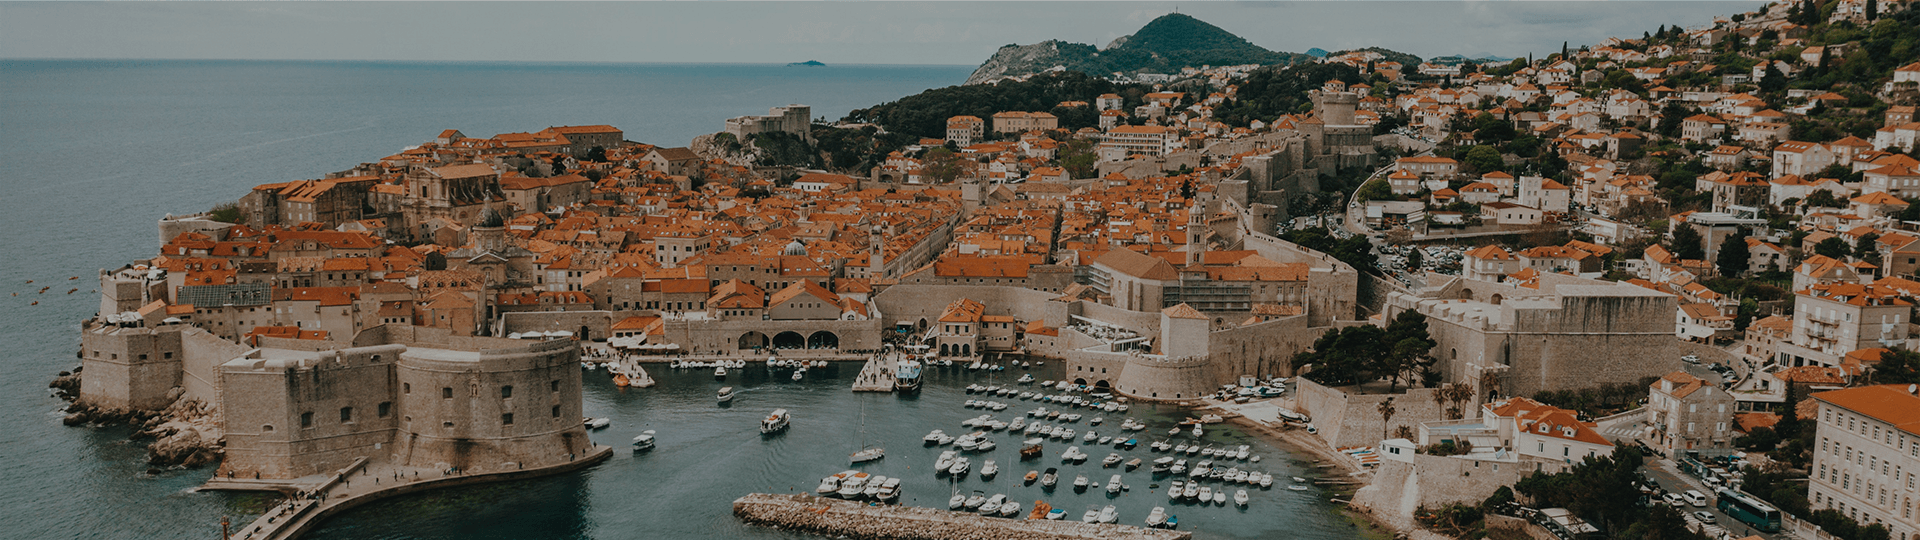 Dubrovnik jet privado.png